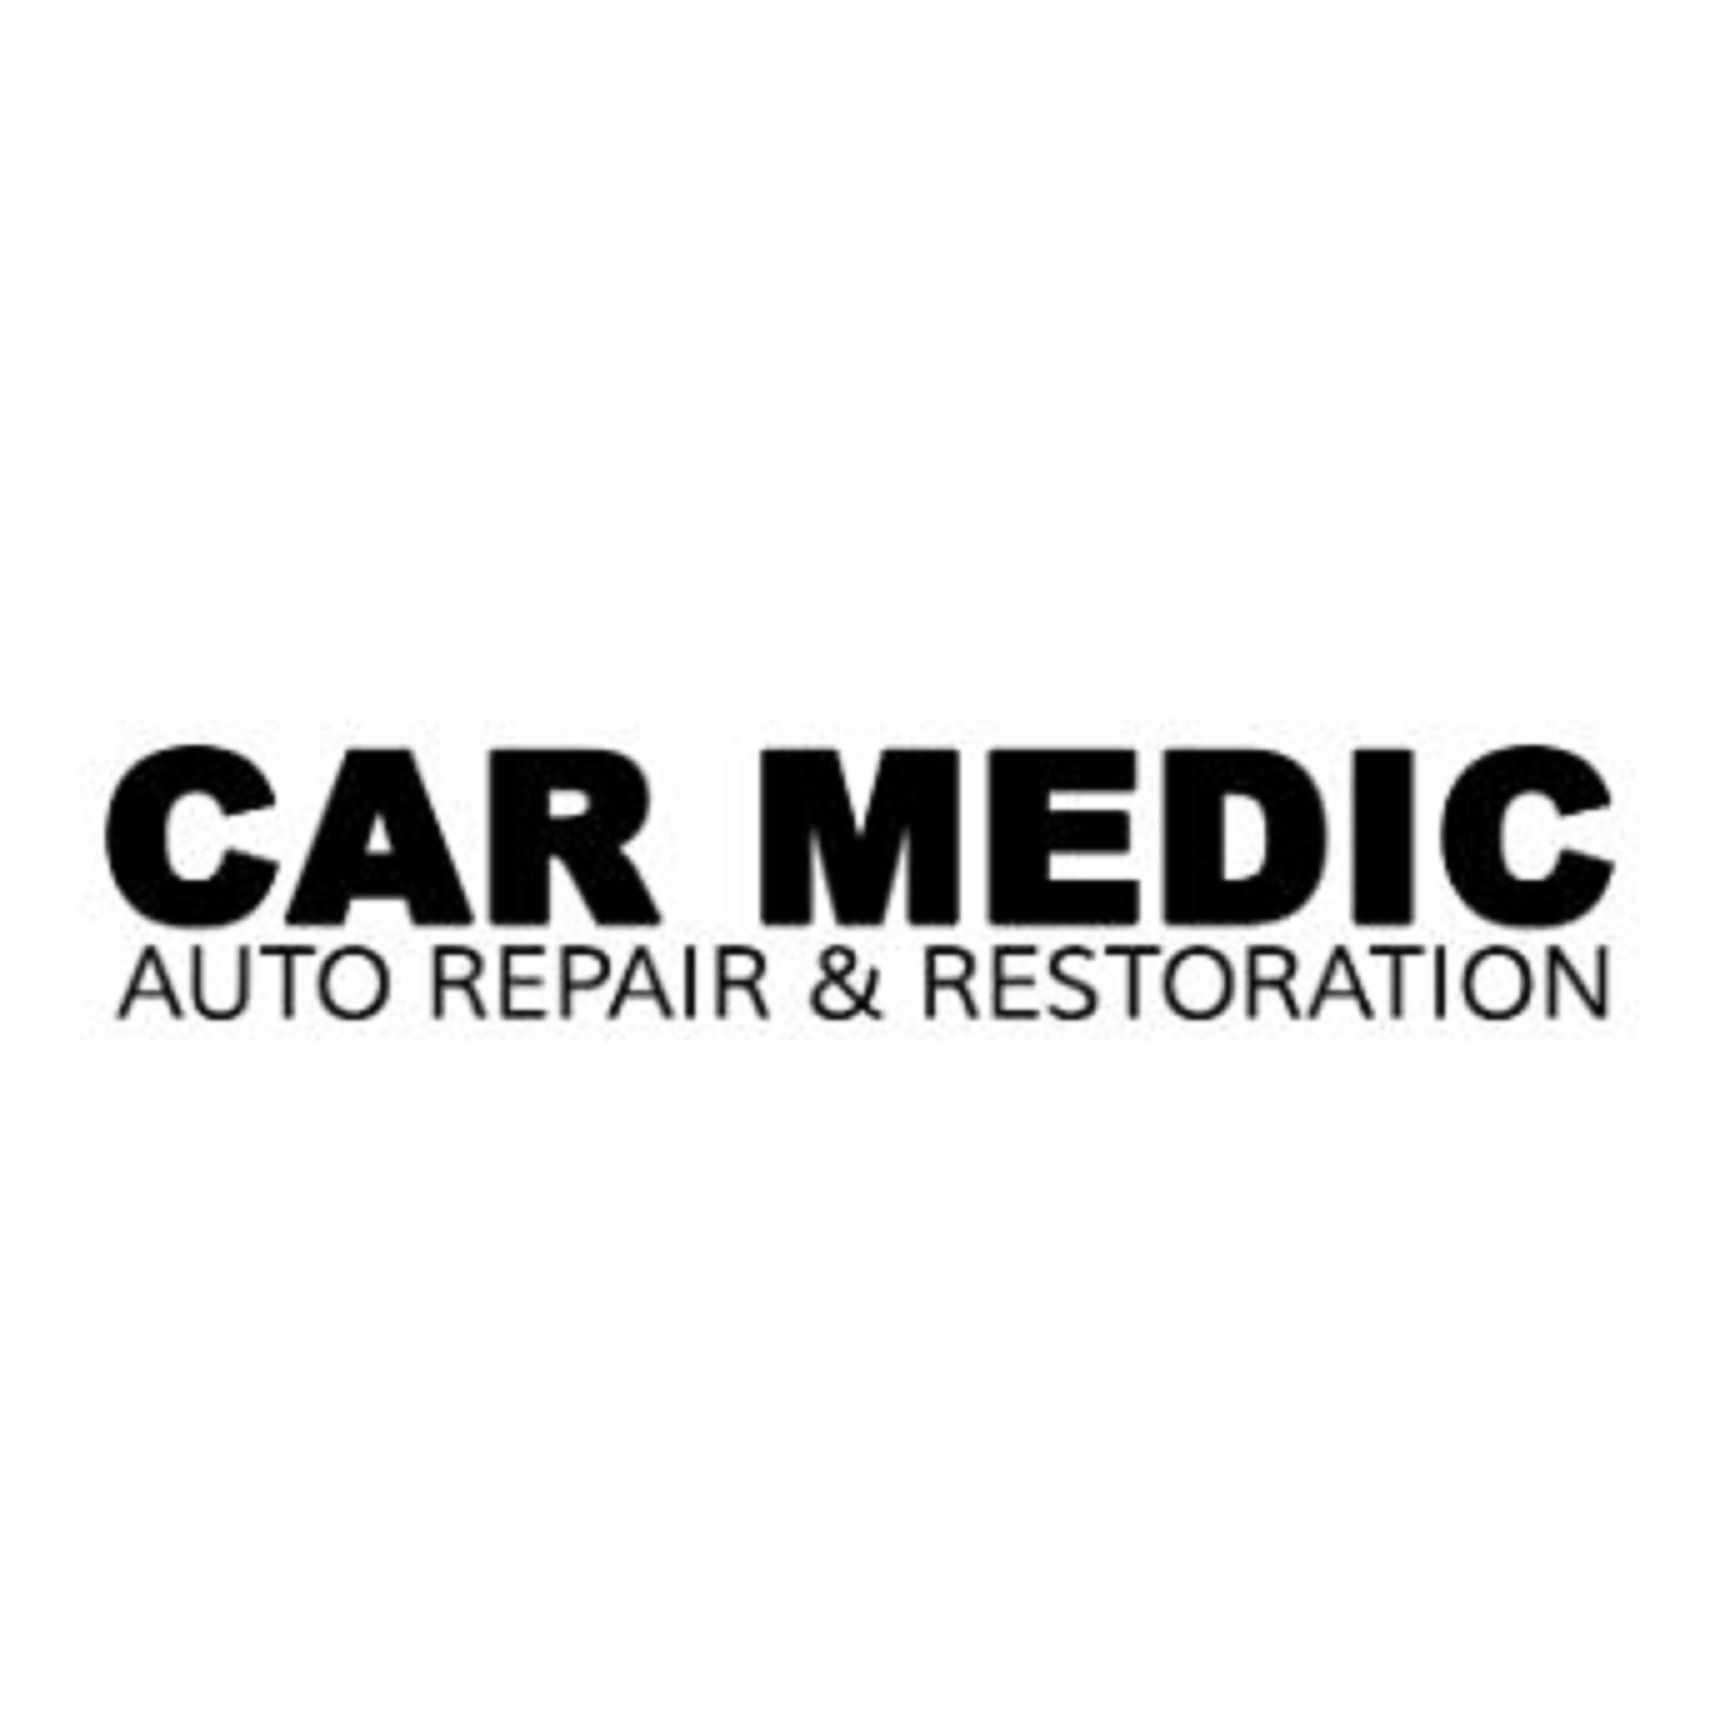 Car Medic Auto Repair & Restoration Logo